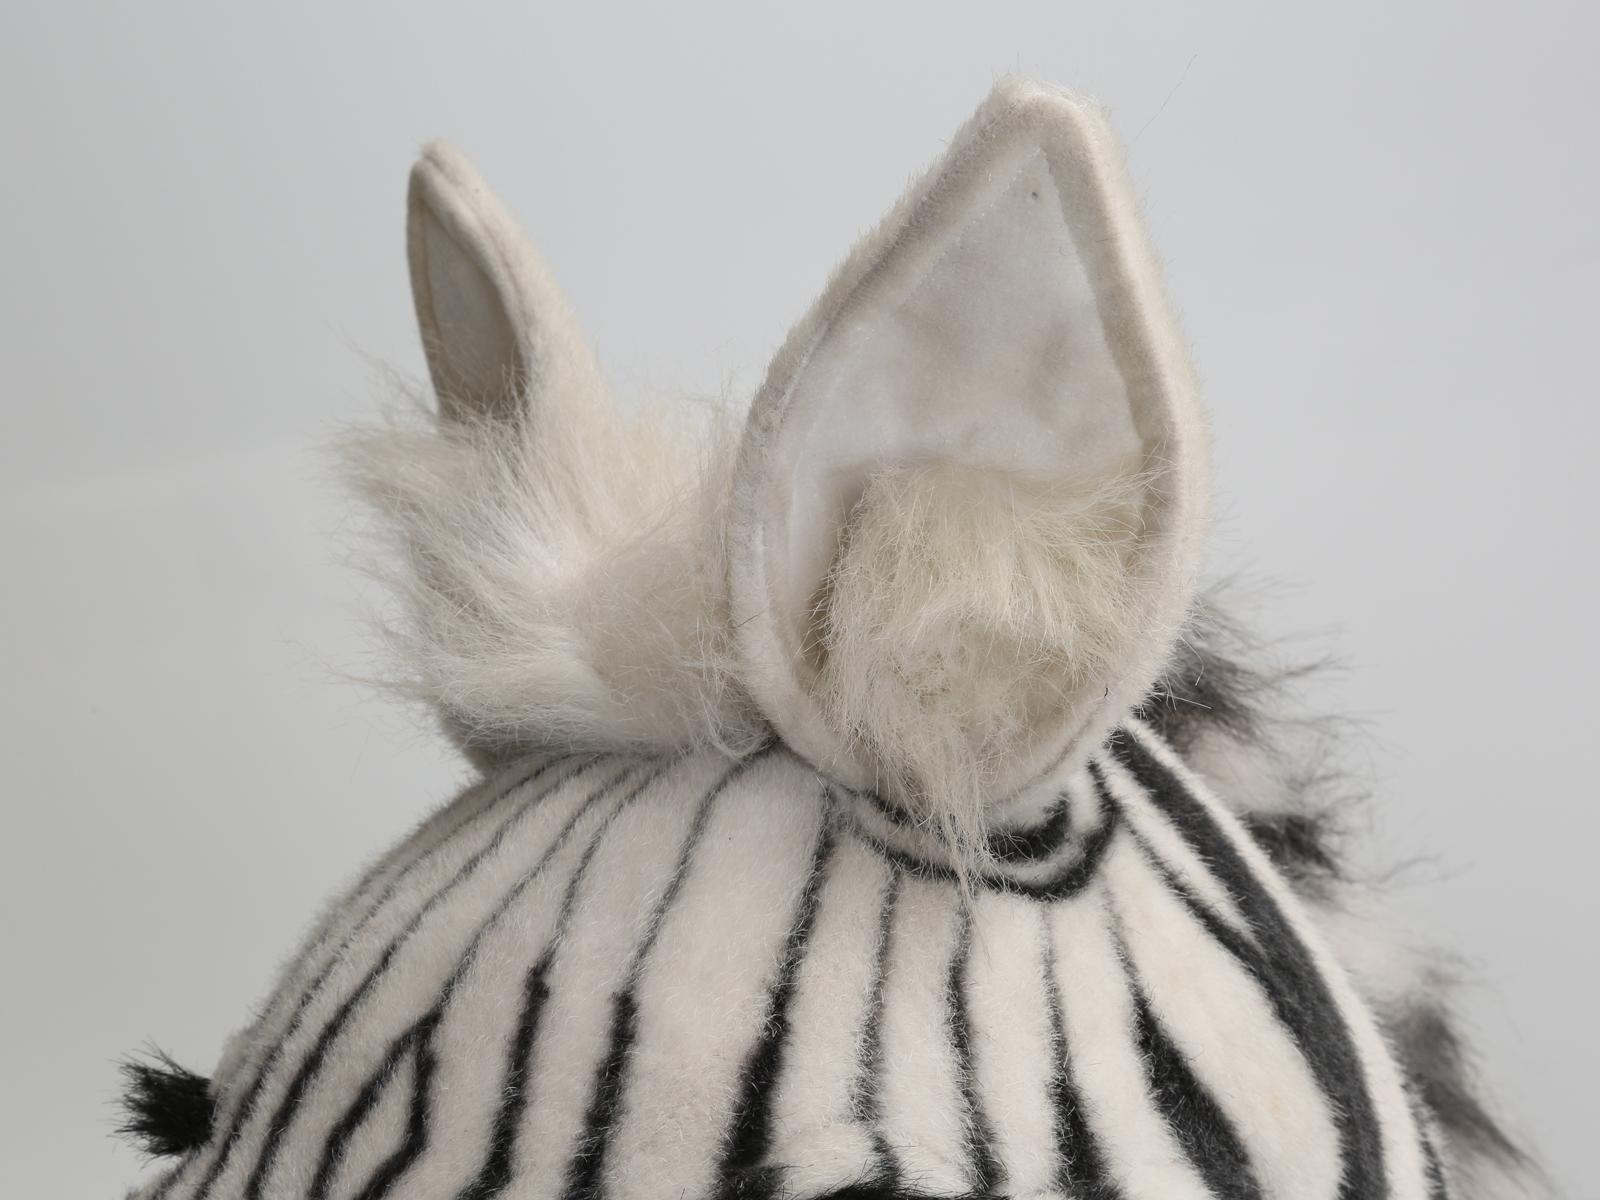 Acrylic Mechanical or Animated Huge Stuffed Zebra, by Hansa and Four Feet High For Sale